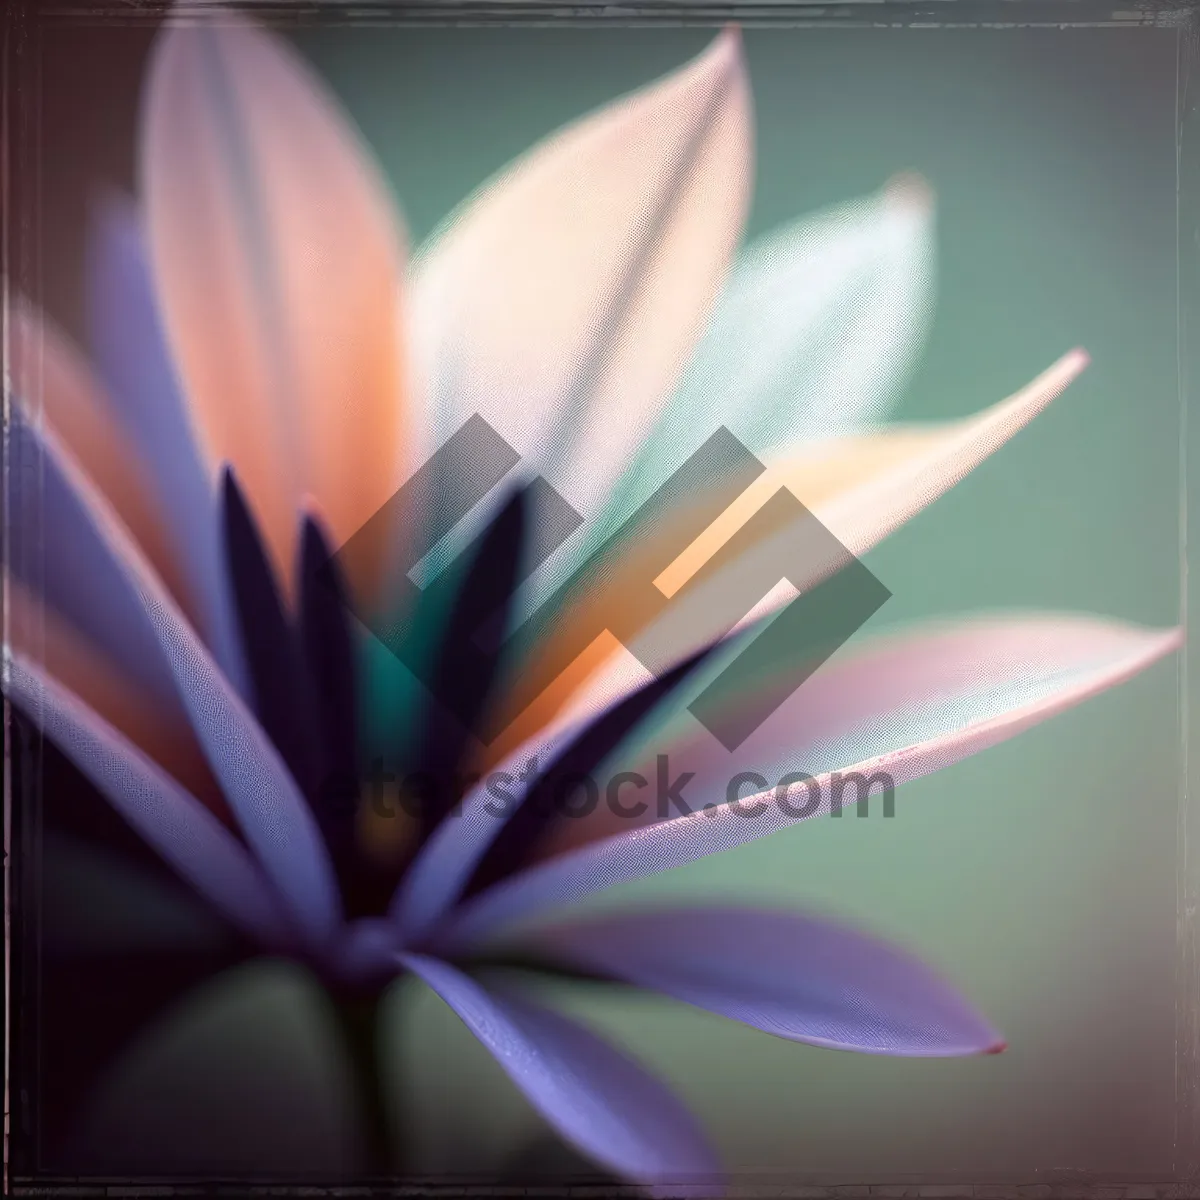 Picture of Luminous Lotus Petal Artwork with Fractal Patterns